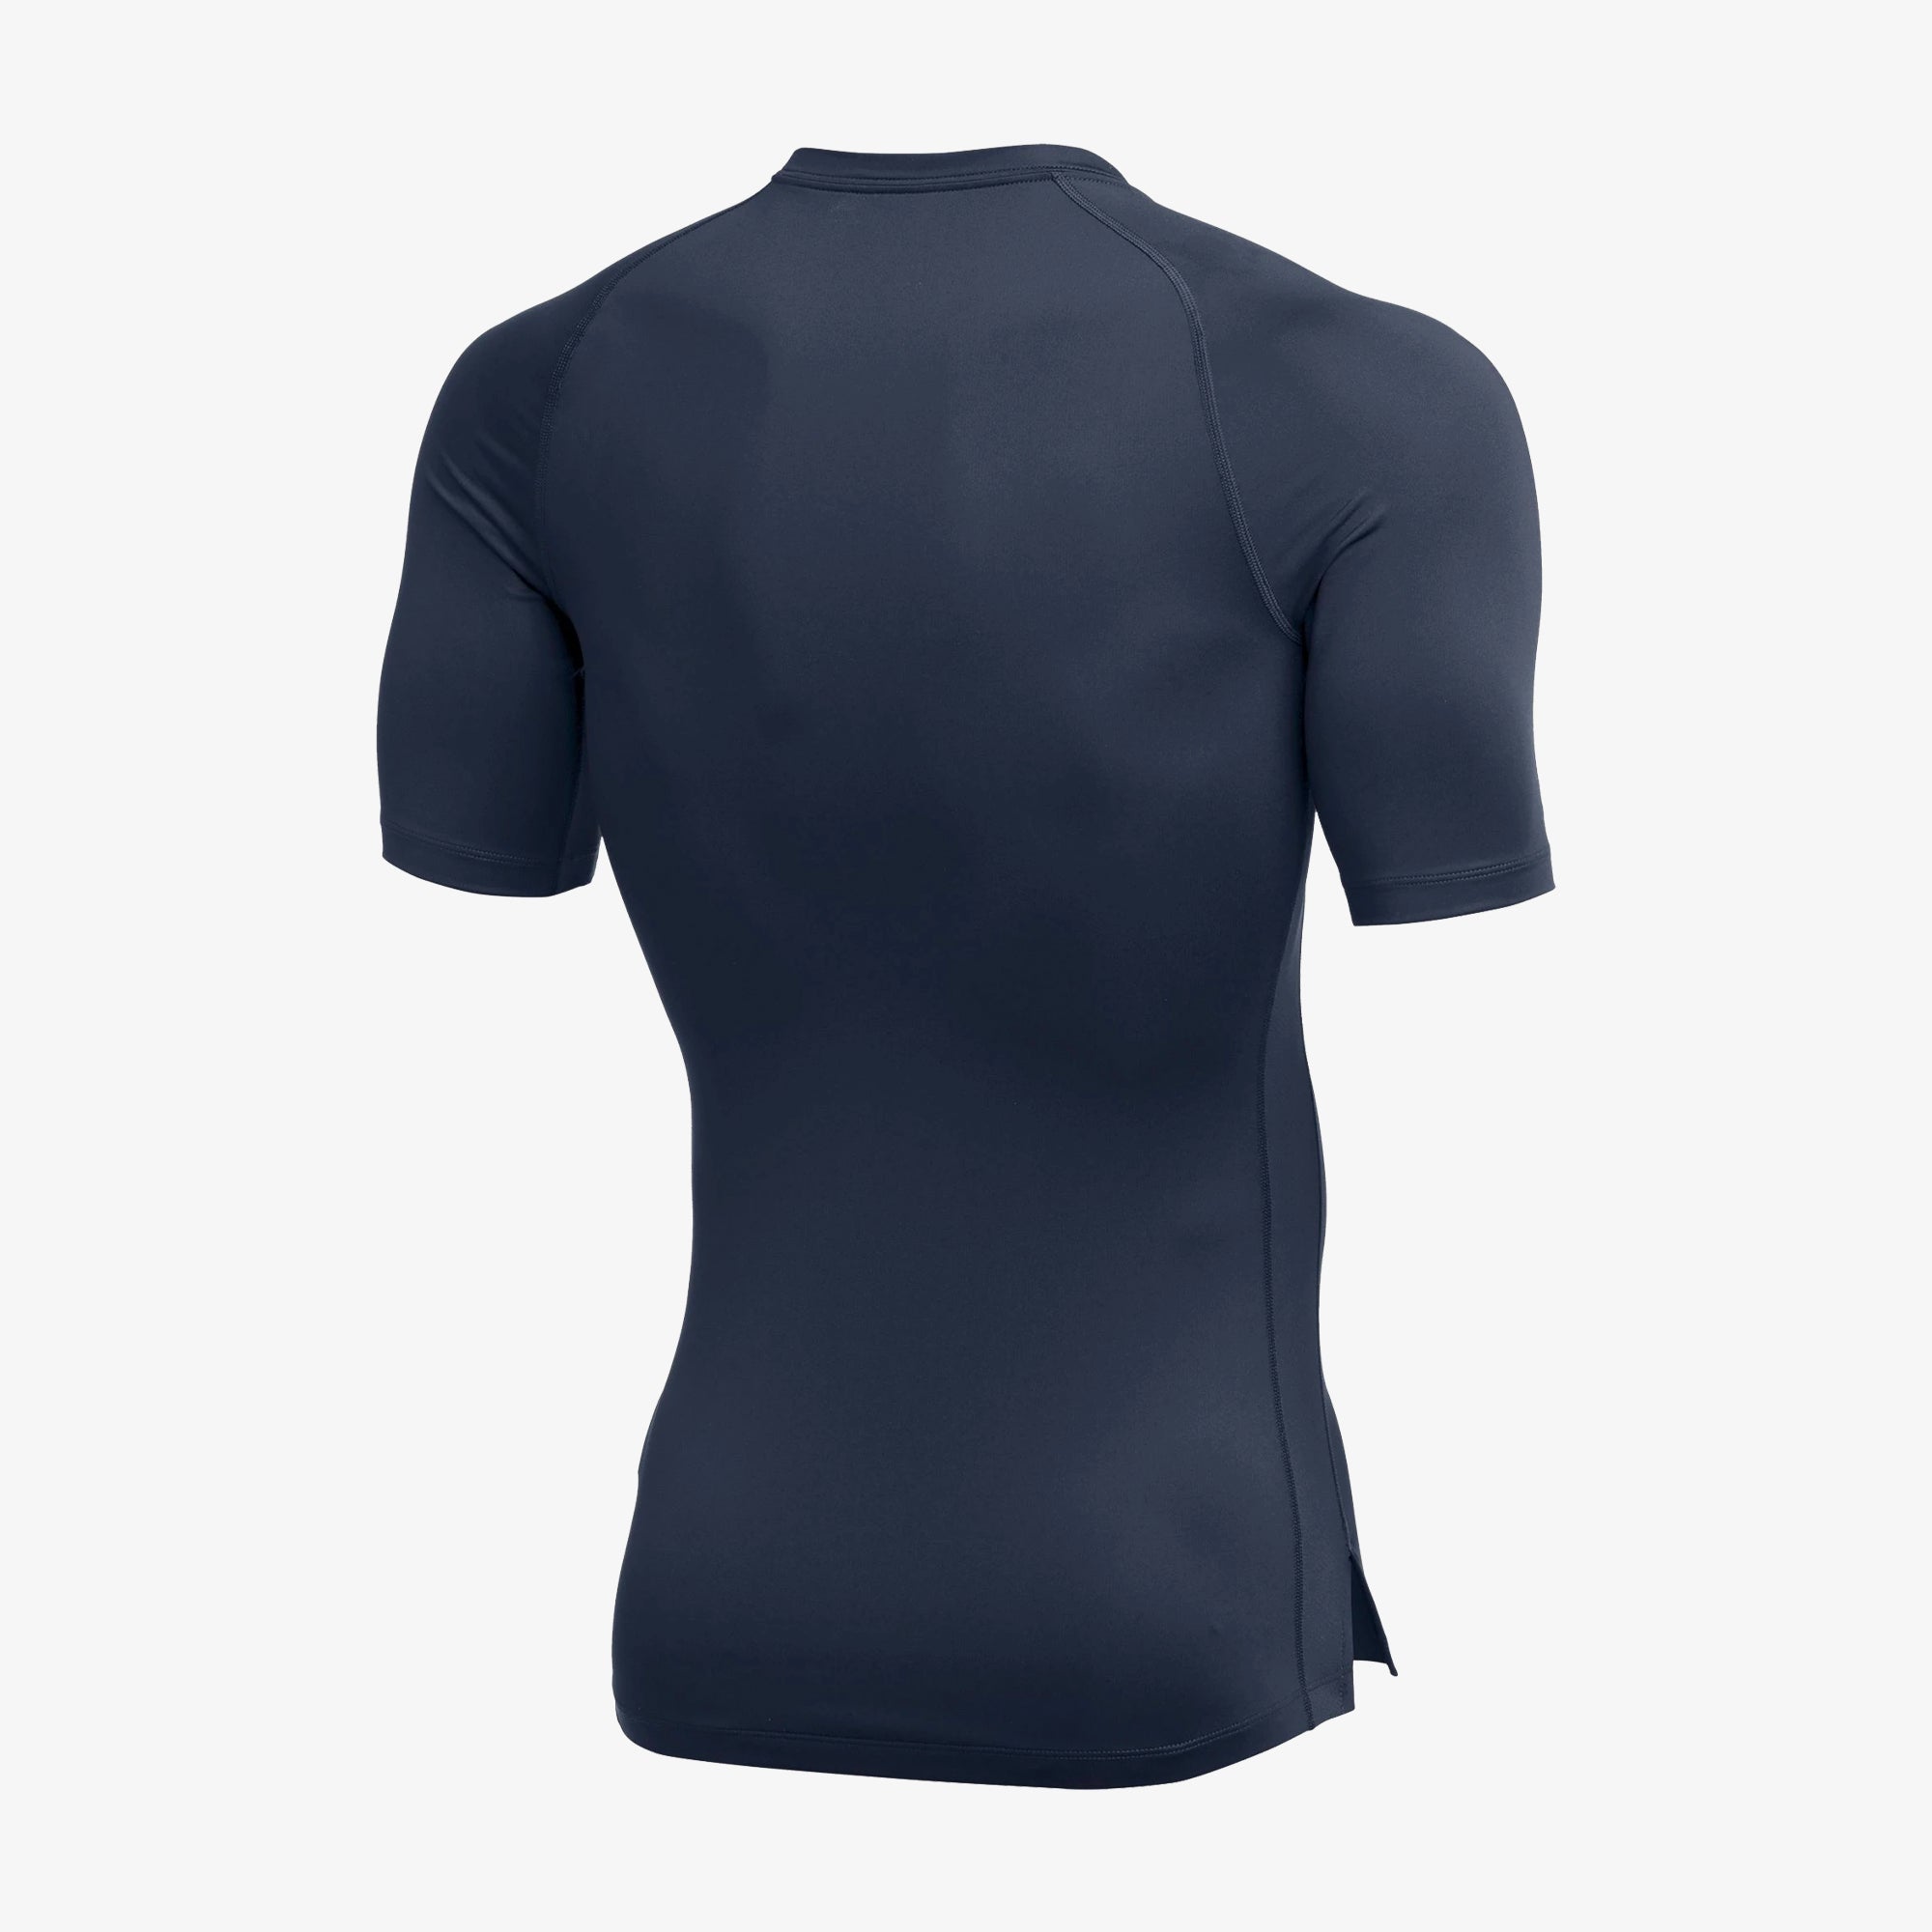 Nike Pro Cool Compression Short Sleeve T-Shirt Grey